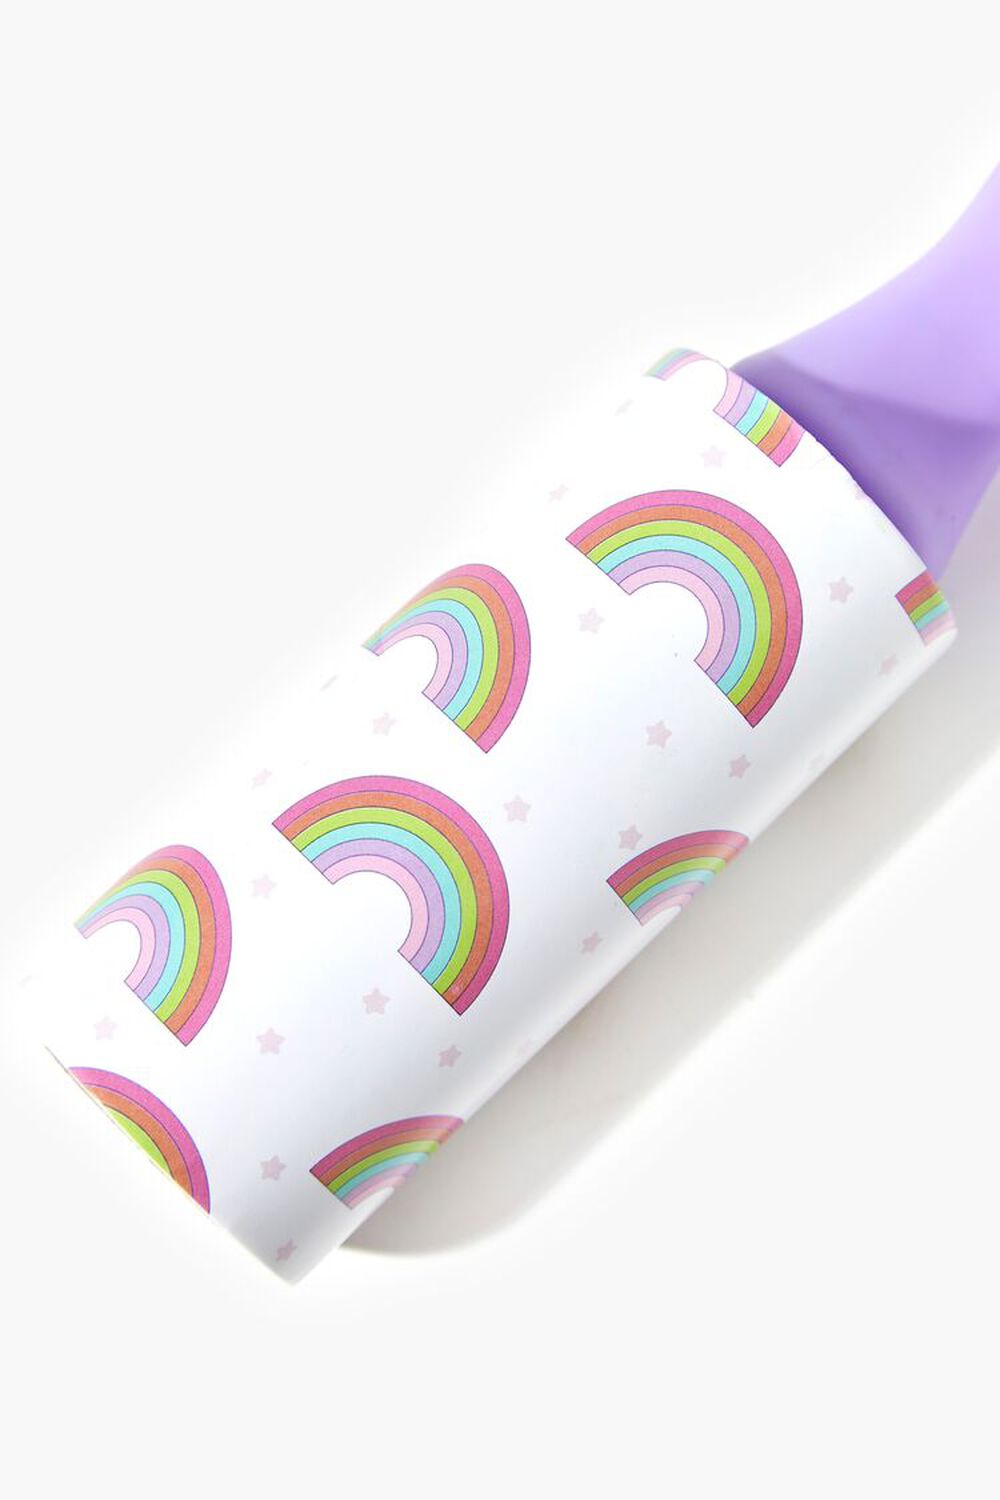 Rainbow & Star Print Lint Roller, image 2